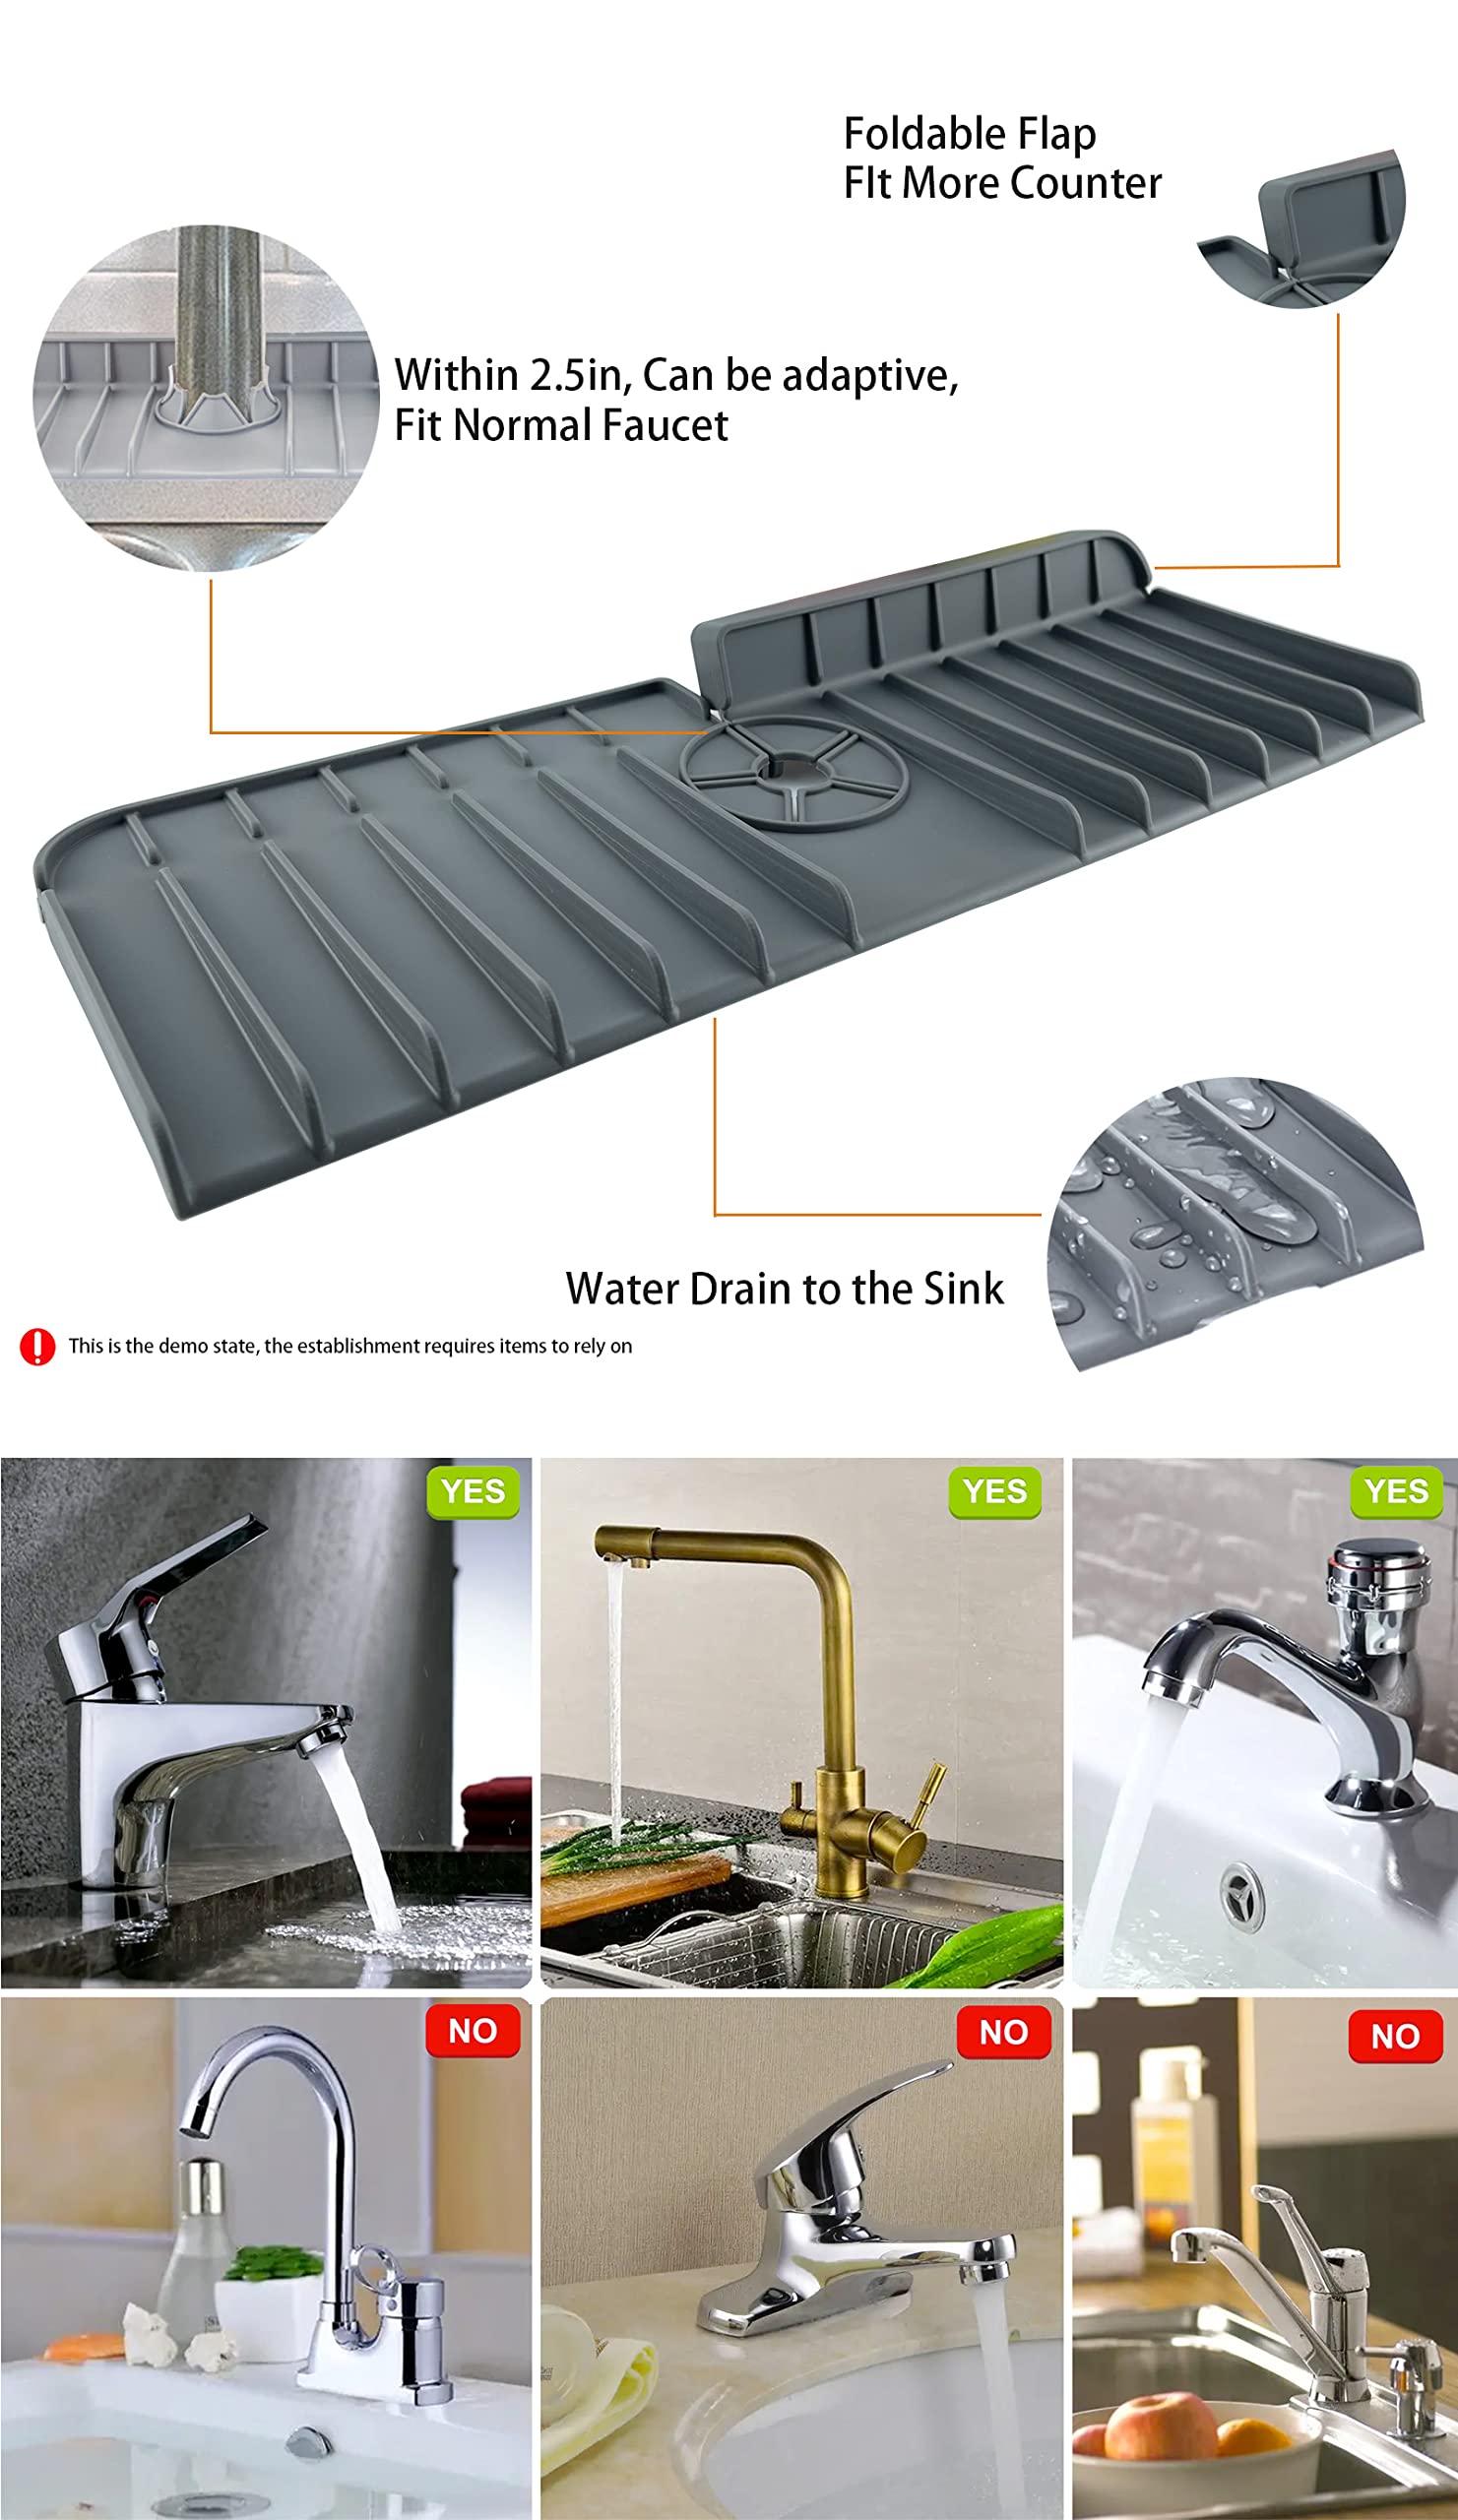 Encoli Silicone Faucet Splash Guard Mat Drip Catcher -Slanted Floor AUTO Drain Water, Sink Draining Pad Behind Faucet, Backsplash Guard, for Kitchen Bathroom Bar Countertop (Grey)